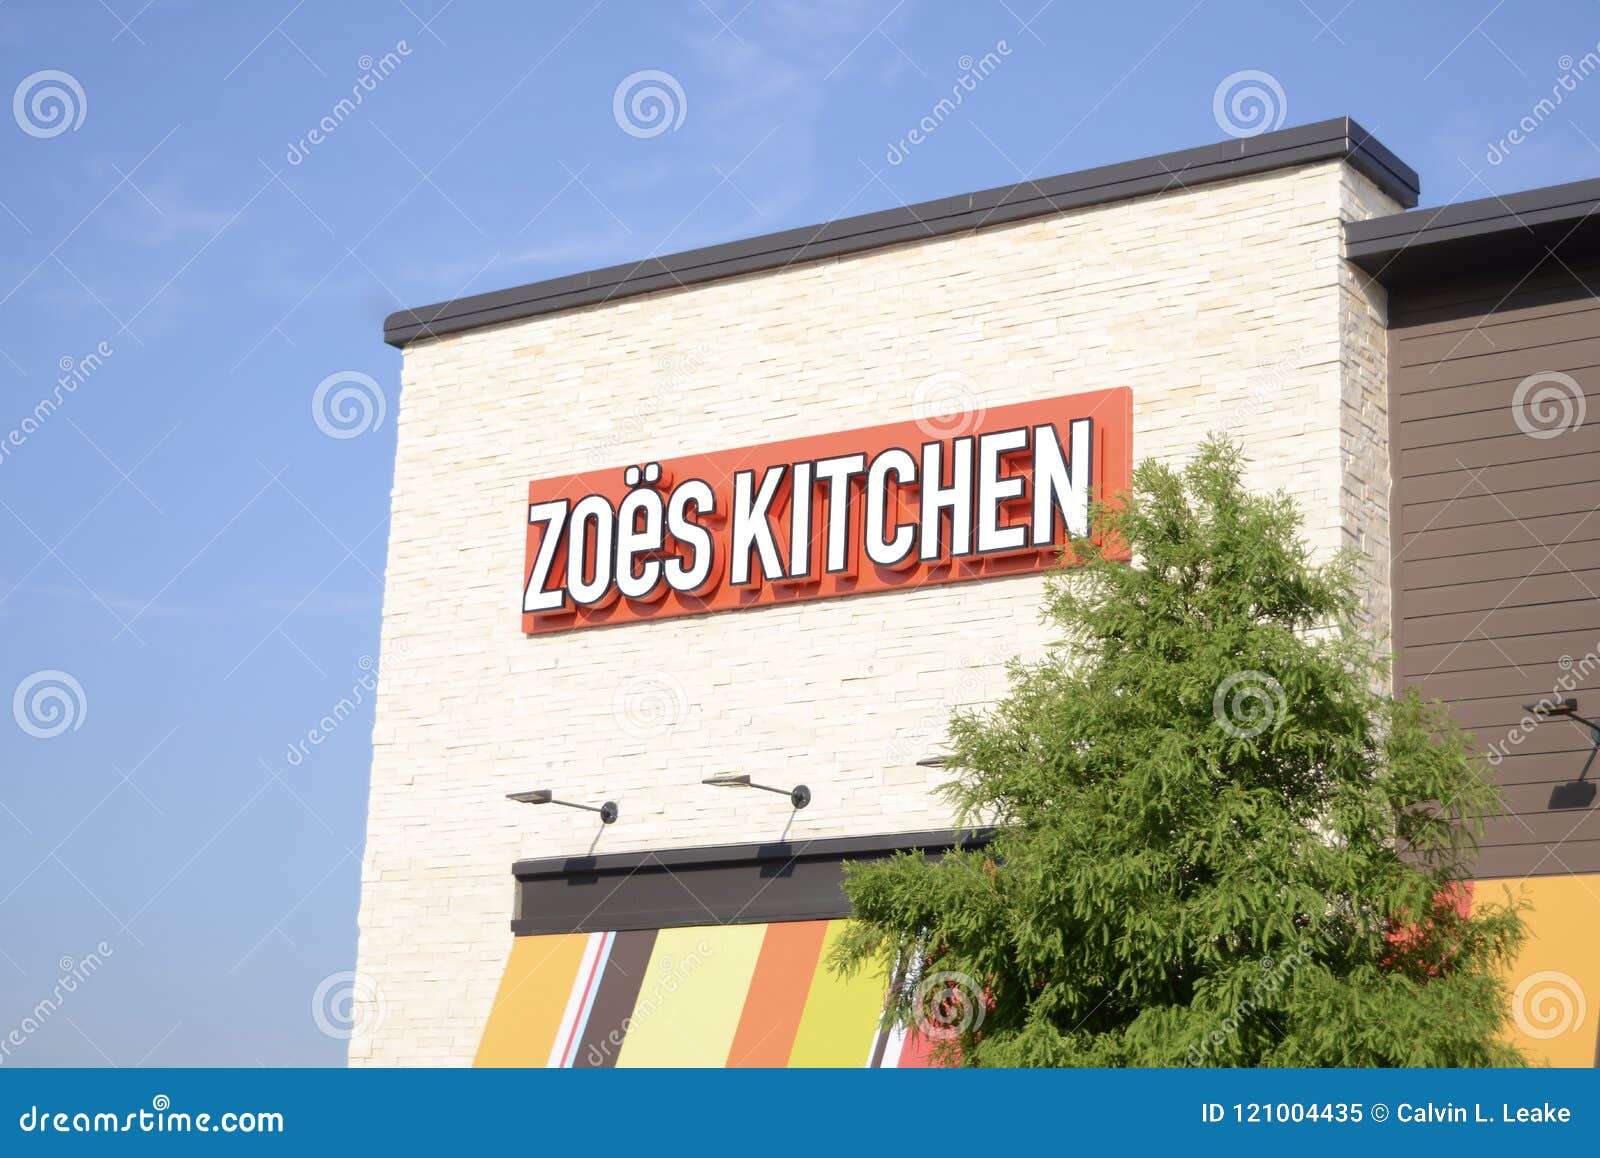 Zoës Kitchen Fast Casual Restaurant Chain Headquartered Plano Texas United States Serving Menu Variety Chicken 121004435 